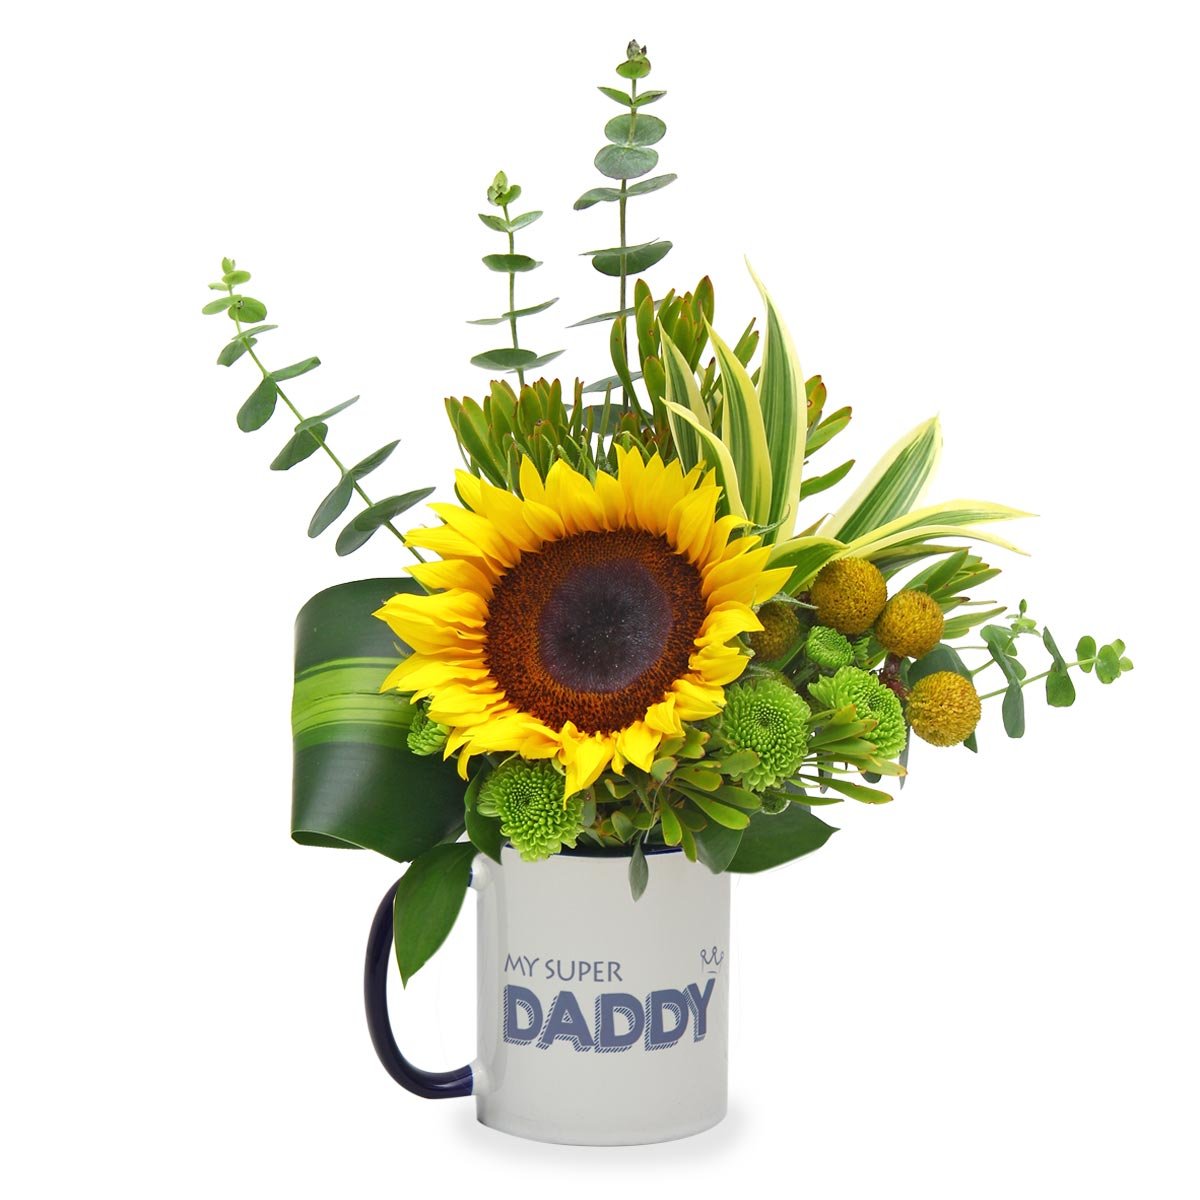 My Super Dad (1 Sunflower with 'My Super Daddy' Mug)